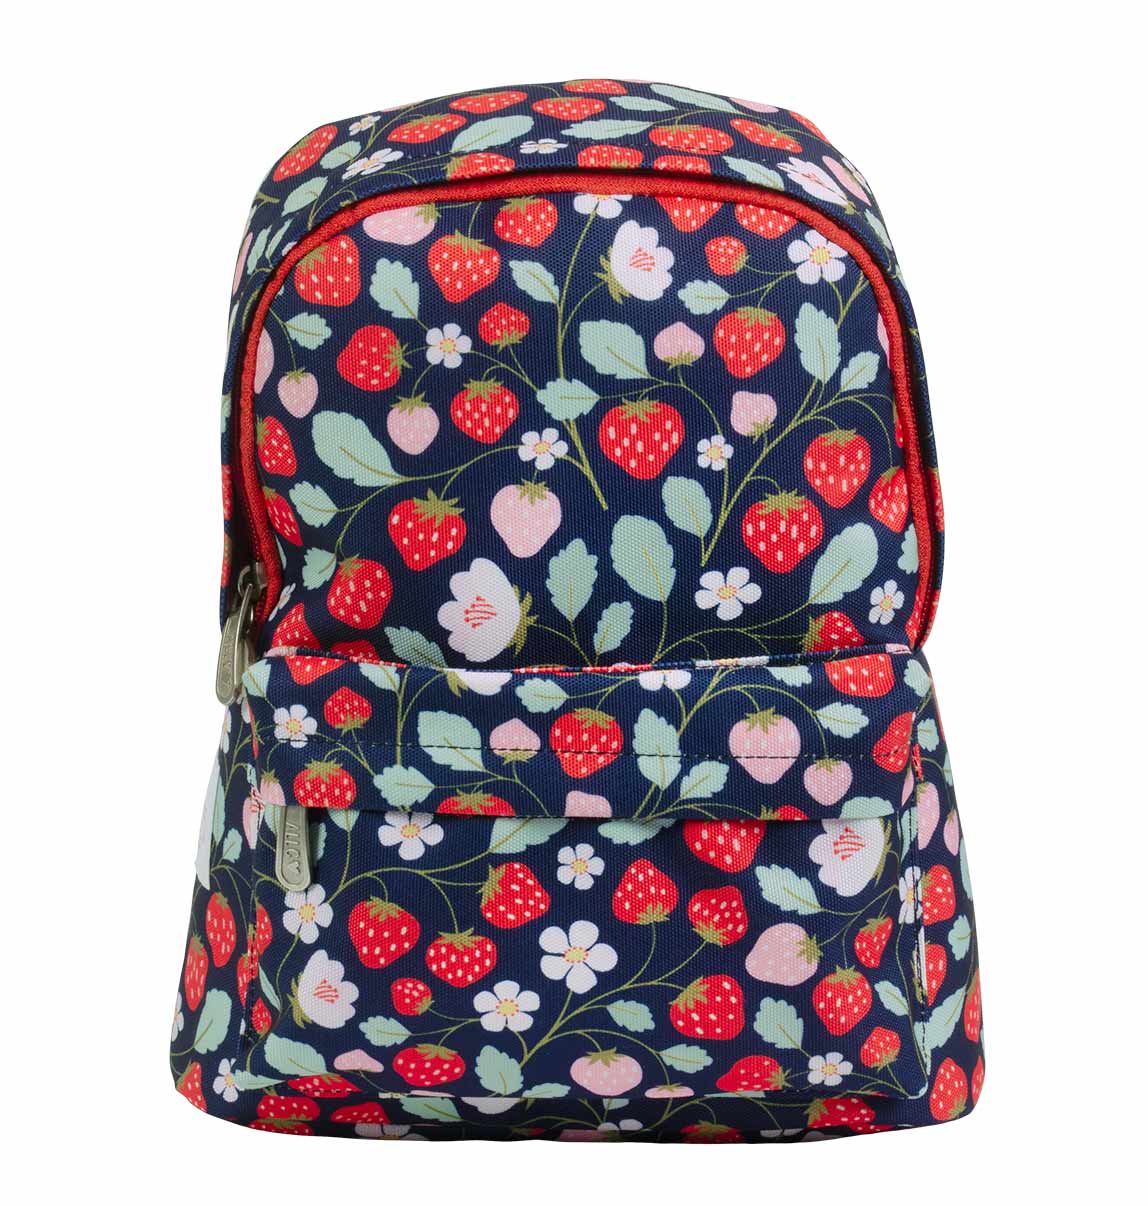 Little kids backpack: Strawberries